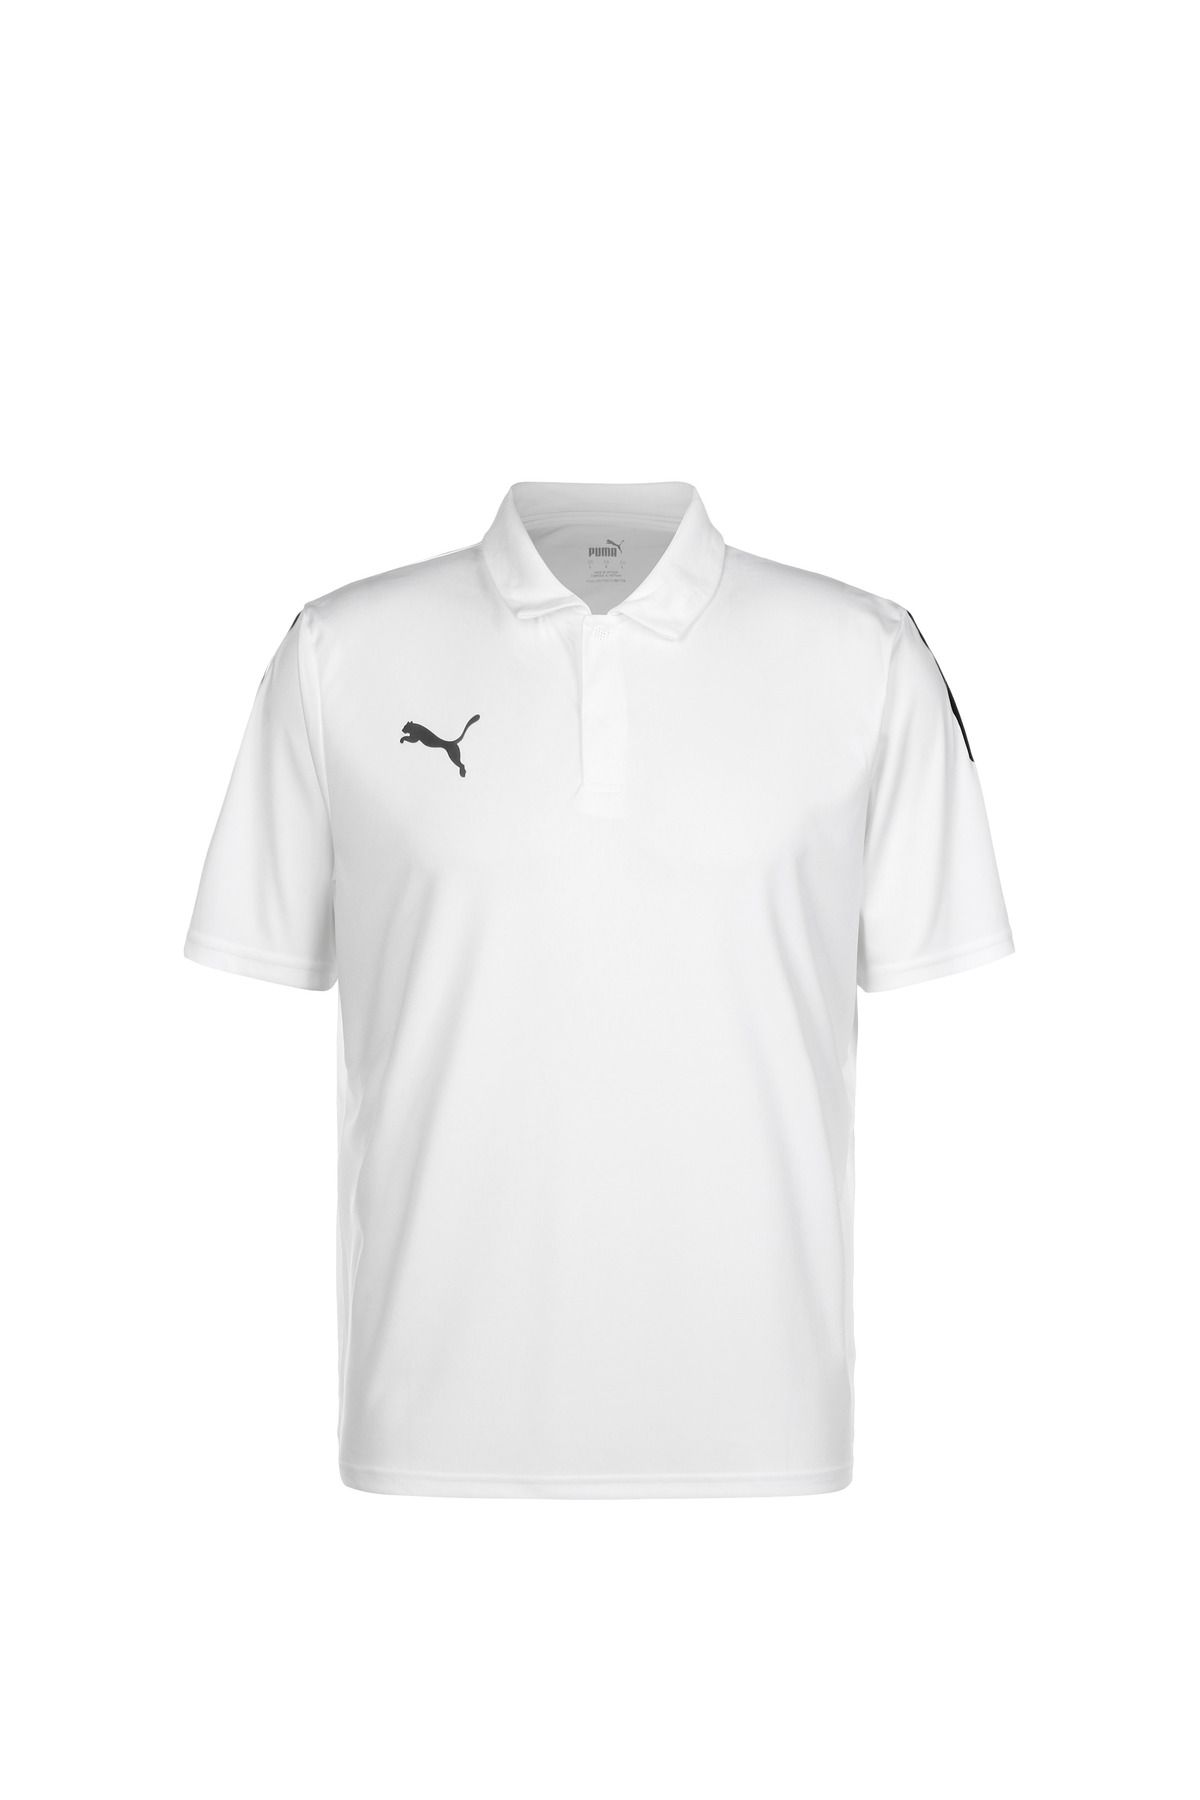 Poloshirt Weiß - Regular Trendyol - Fit - Puma